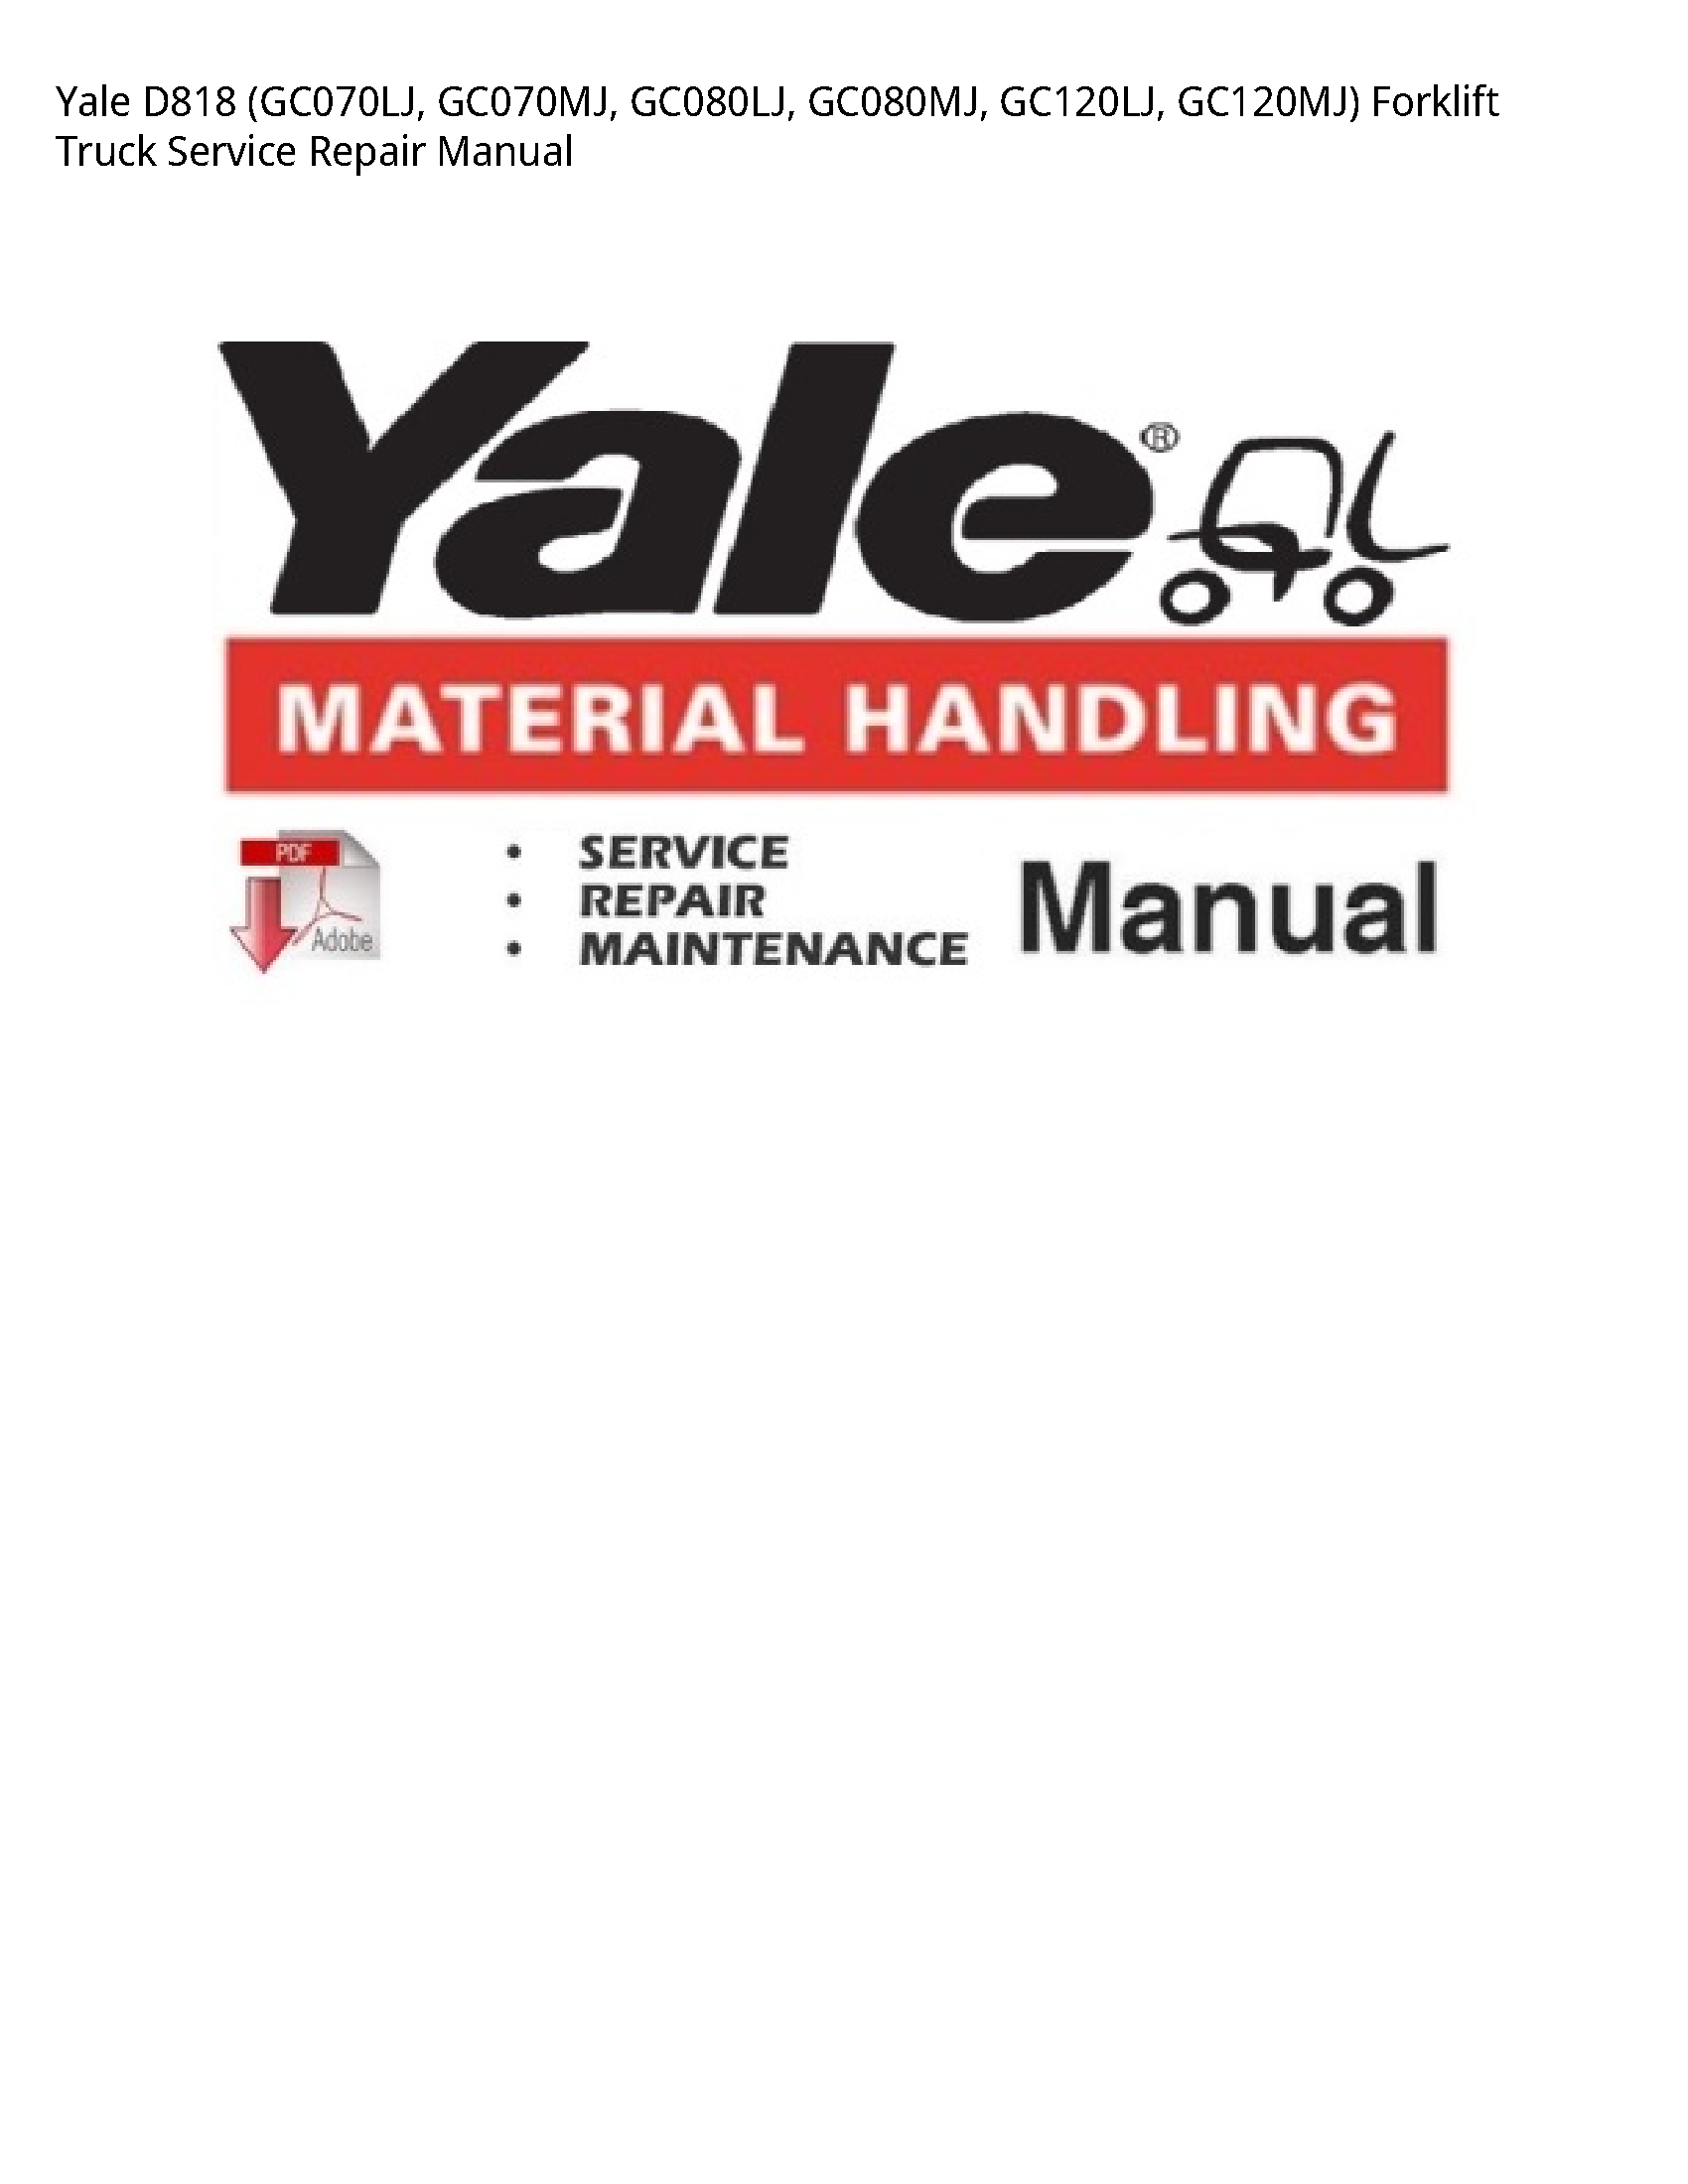 Yale D818 Forklift Truck manual